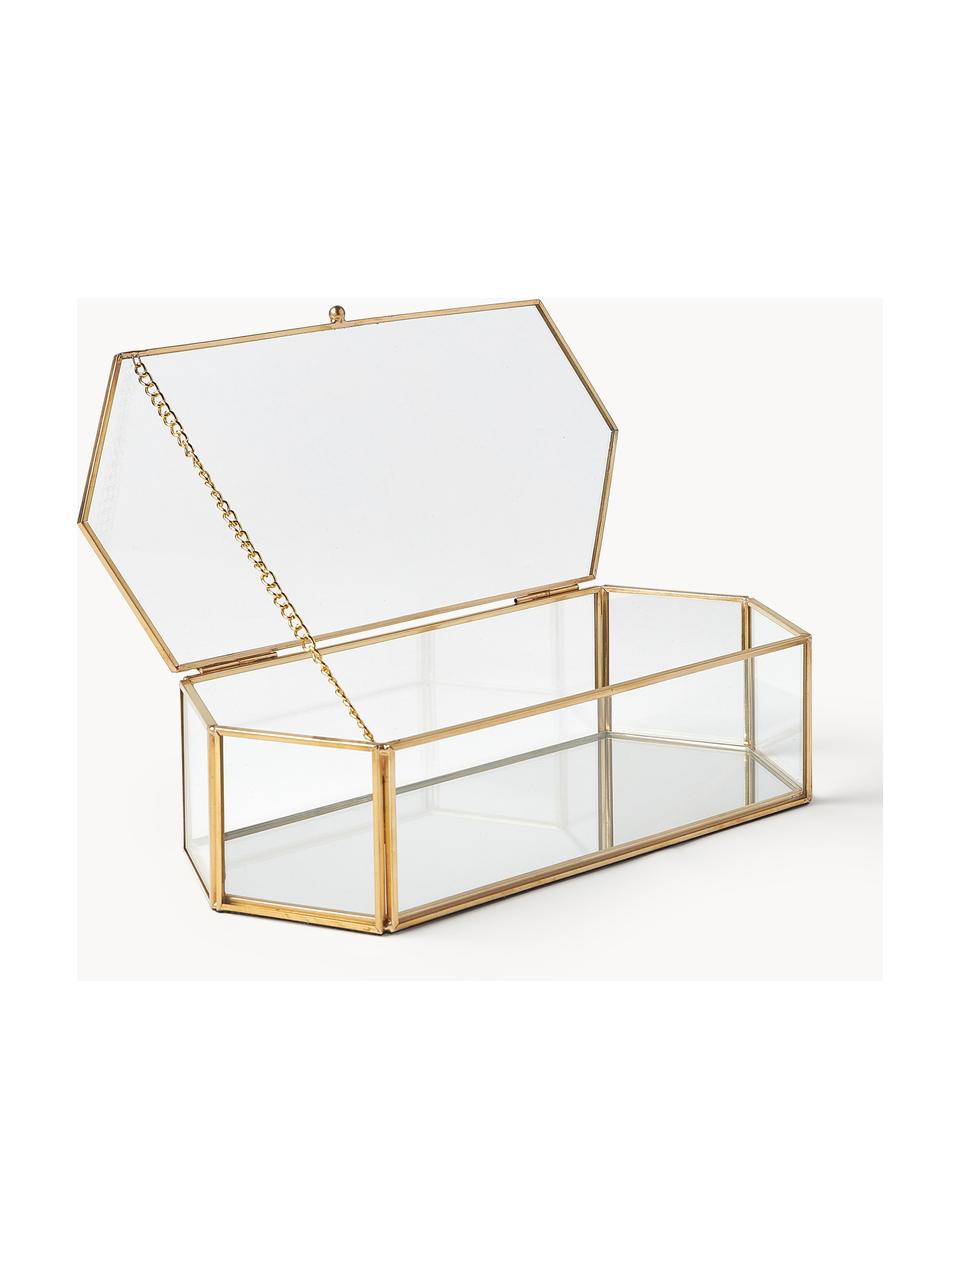 Aufbewahrungsbox Timea aus Glas, Rahmen: Metall, beschichtet, Goldfarben, B 23 x T 10 cm